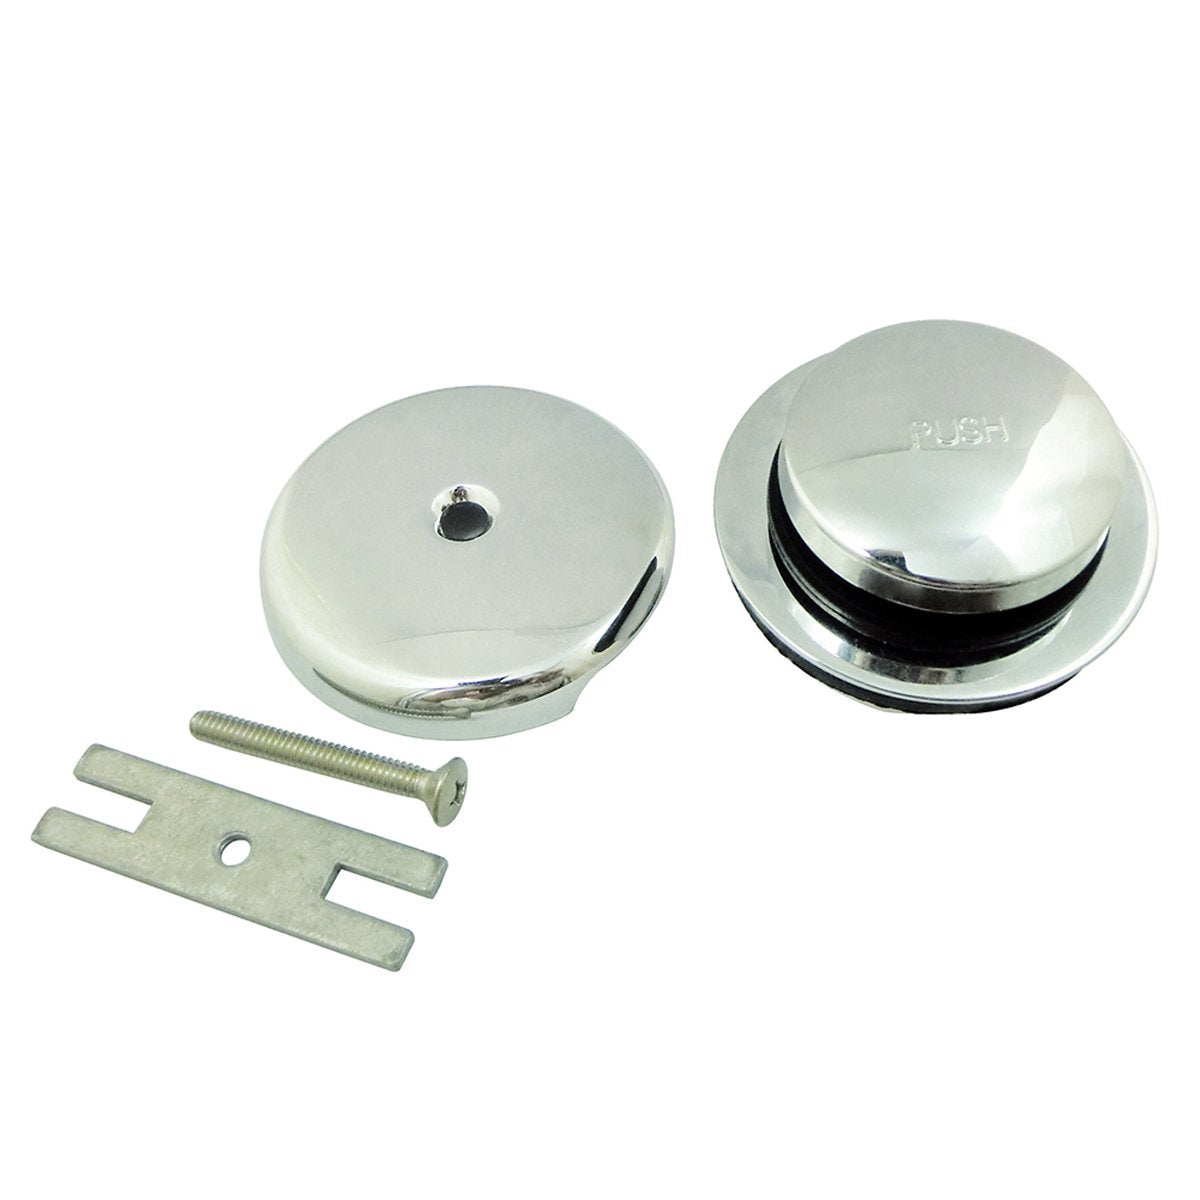 Kingston Brass Made to Match Toe Tap Drain Kit-Bathroom Accessories-Free Shipping-Directsinks.